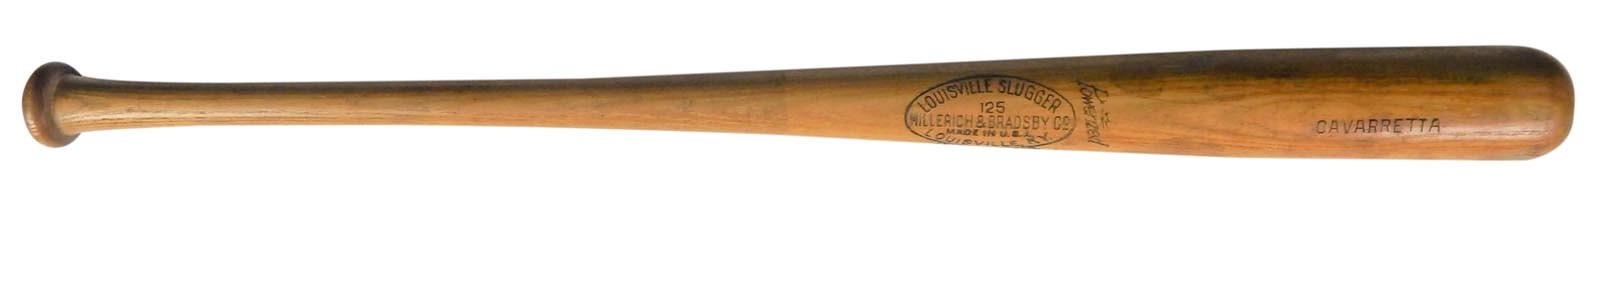 - Early 1940's Phil Cavarretta Game Used Bat "MVP and Batting Champ"